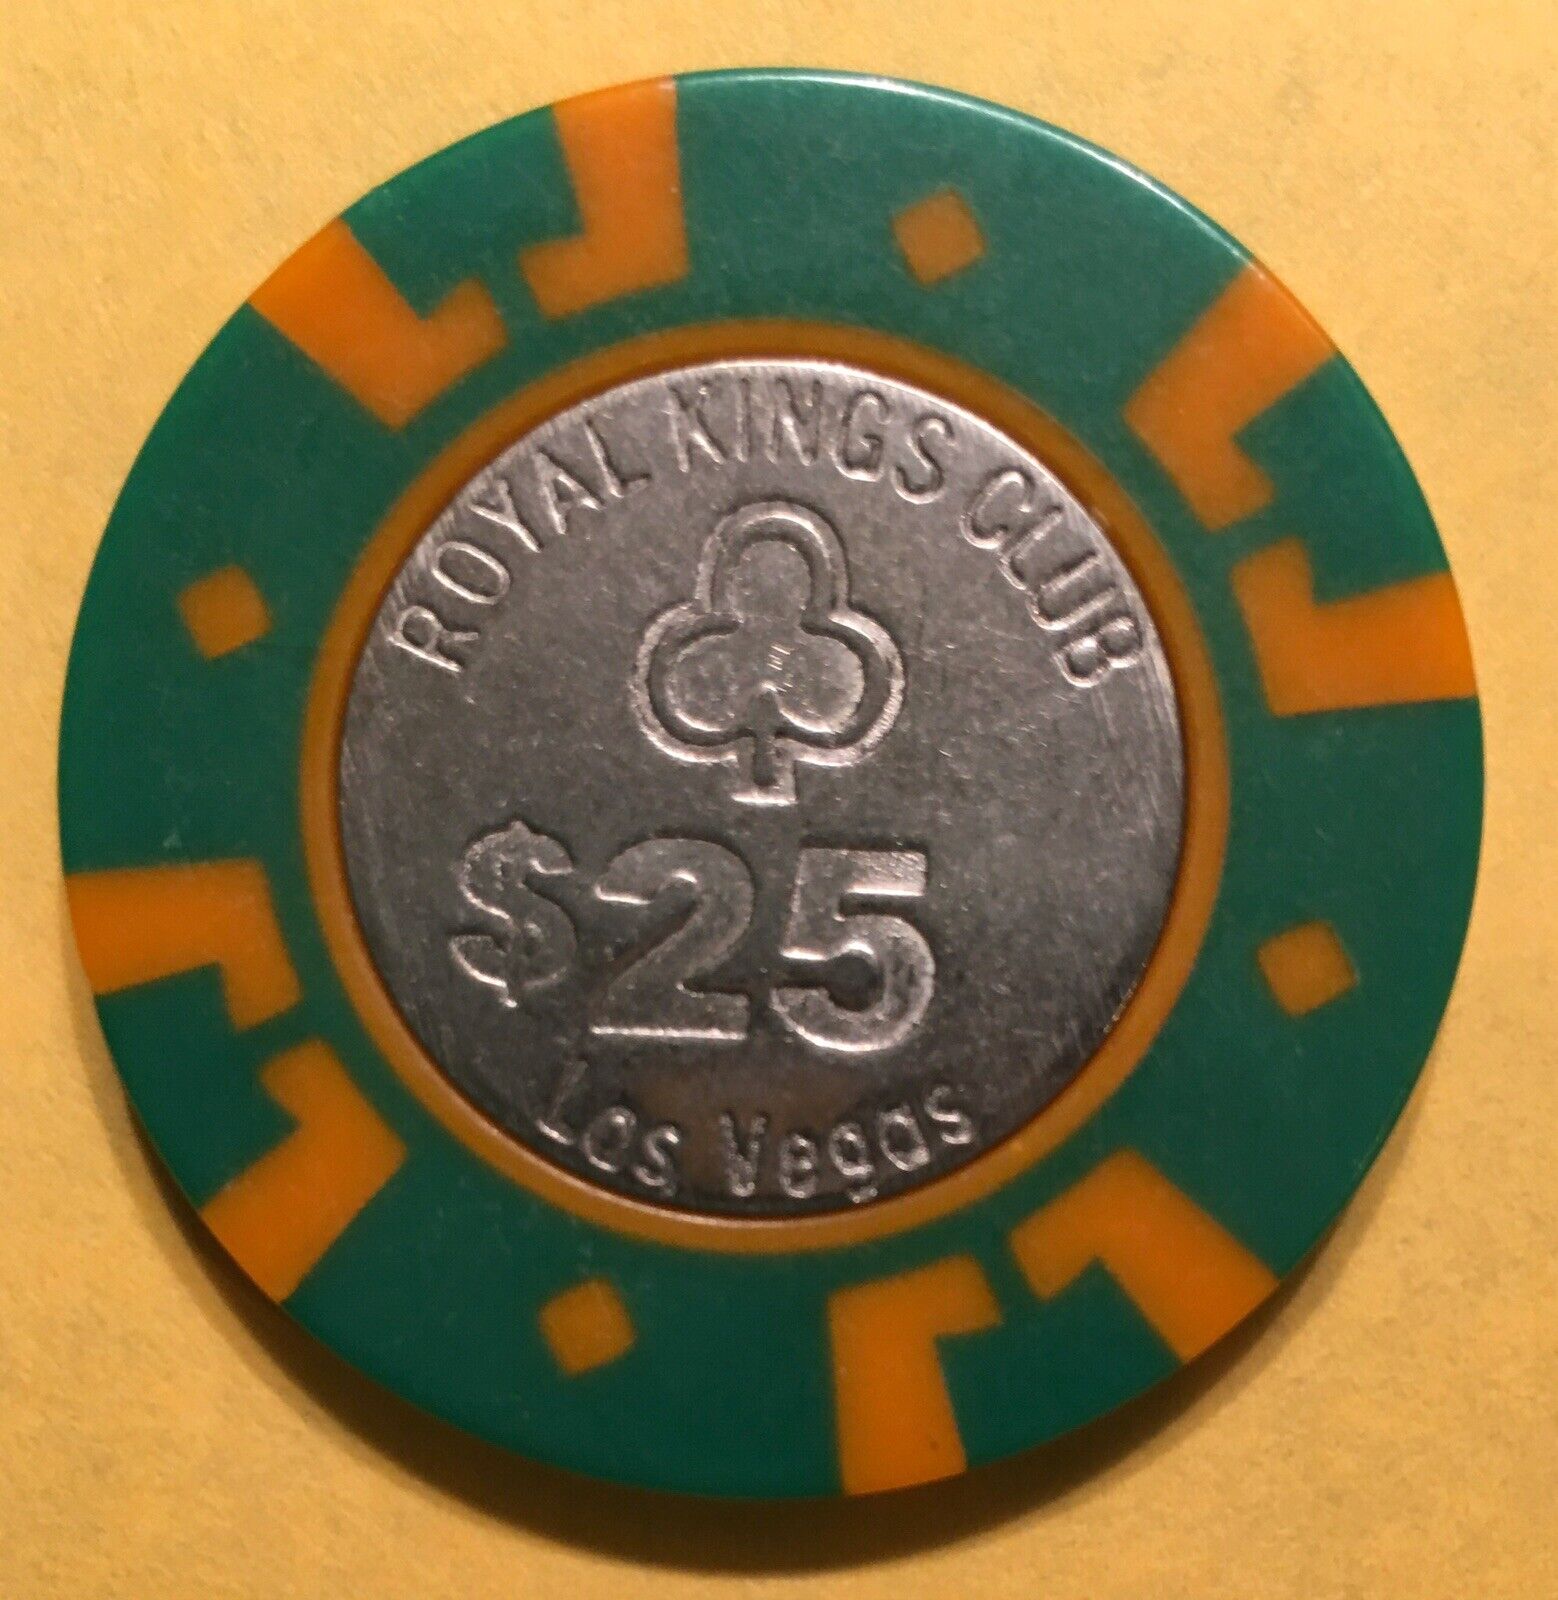 Vintage ROYAL KINGS CLUB $25 Twenty-Five Poker Chip LAS VEGAS CASINO Metal Inlay